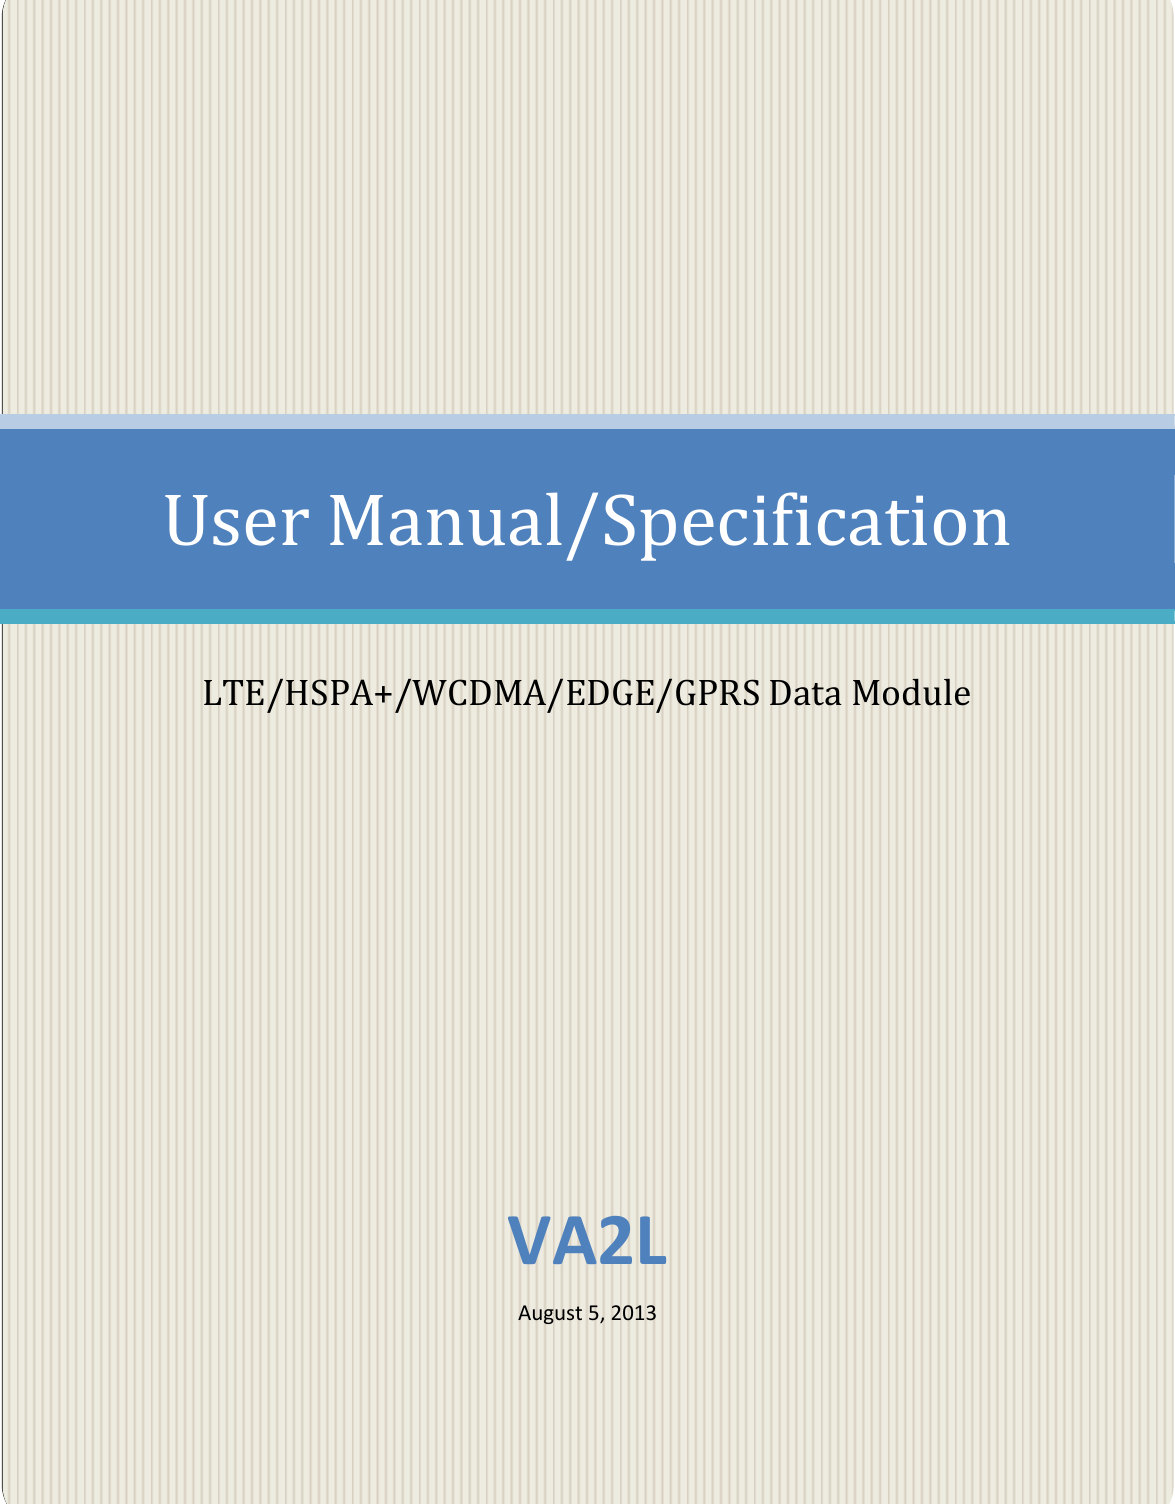     User Manual/Specification  LTE/HSPA+/WCDMA/EDGE/GPRS Data Module  VA2L August 5, 2013  